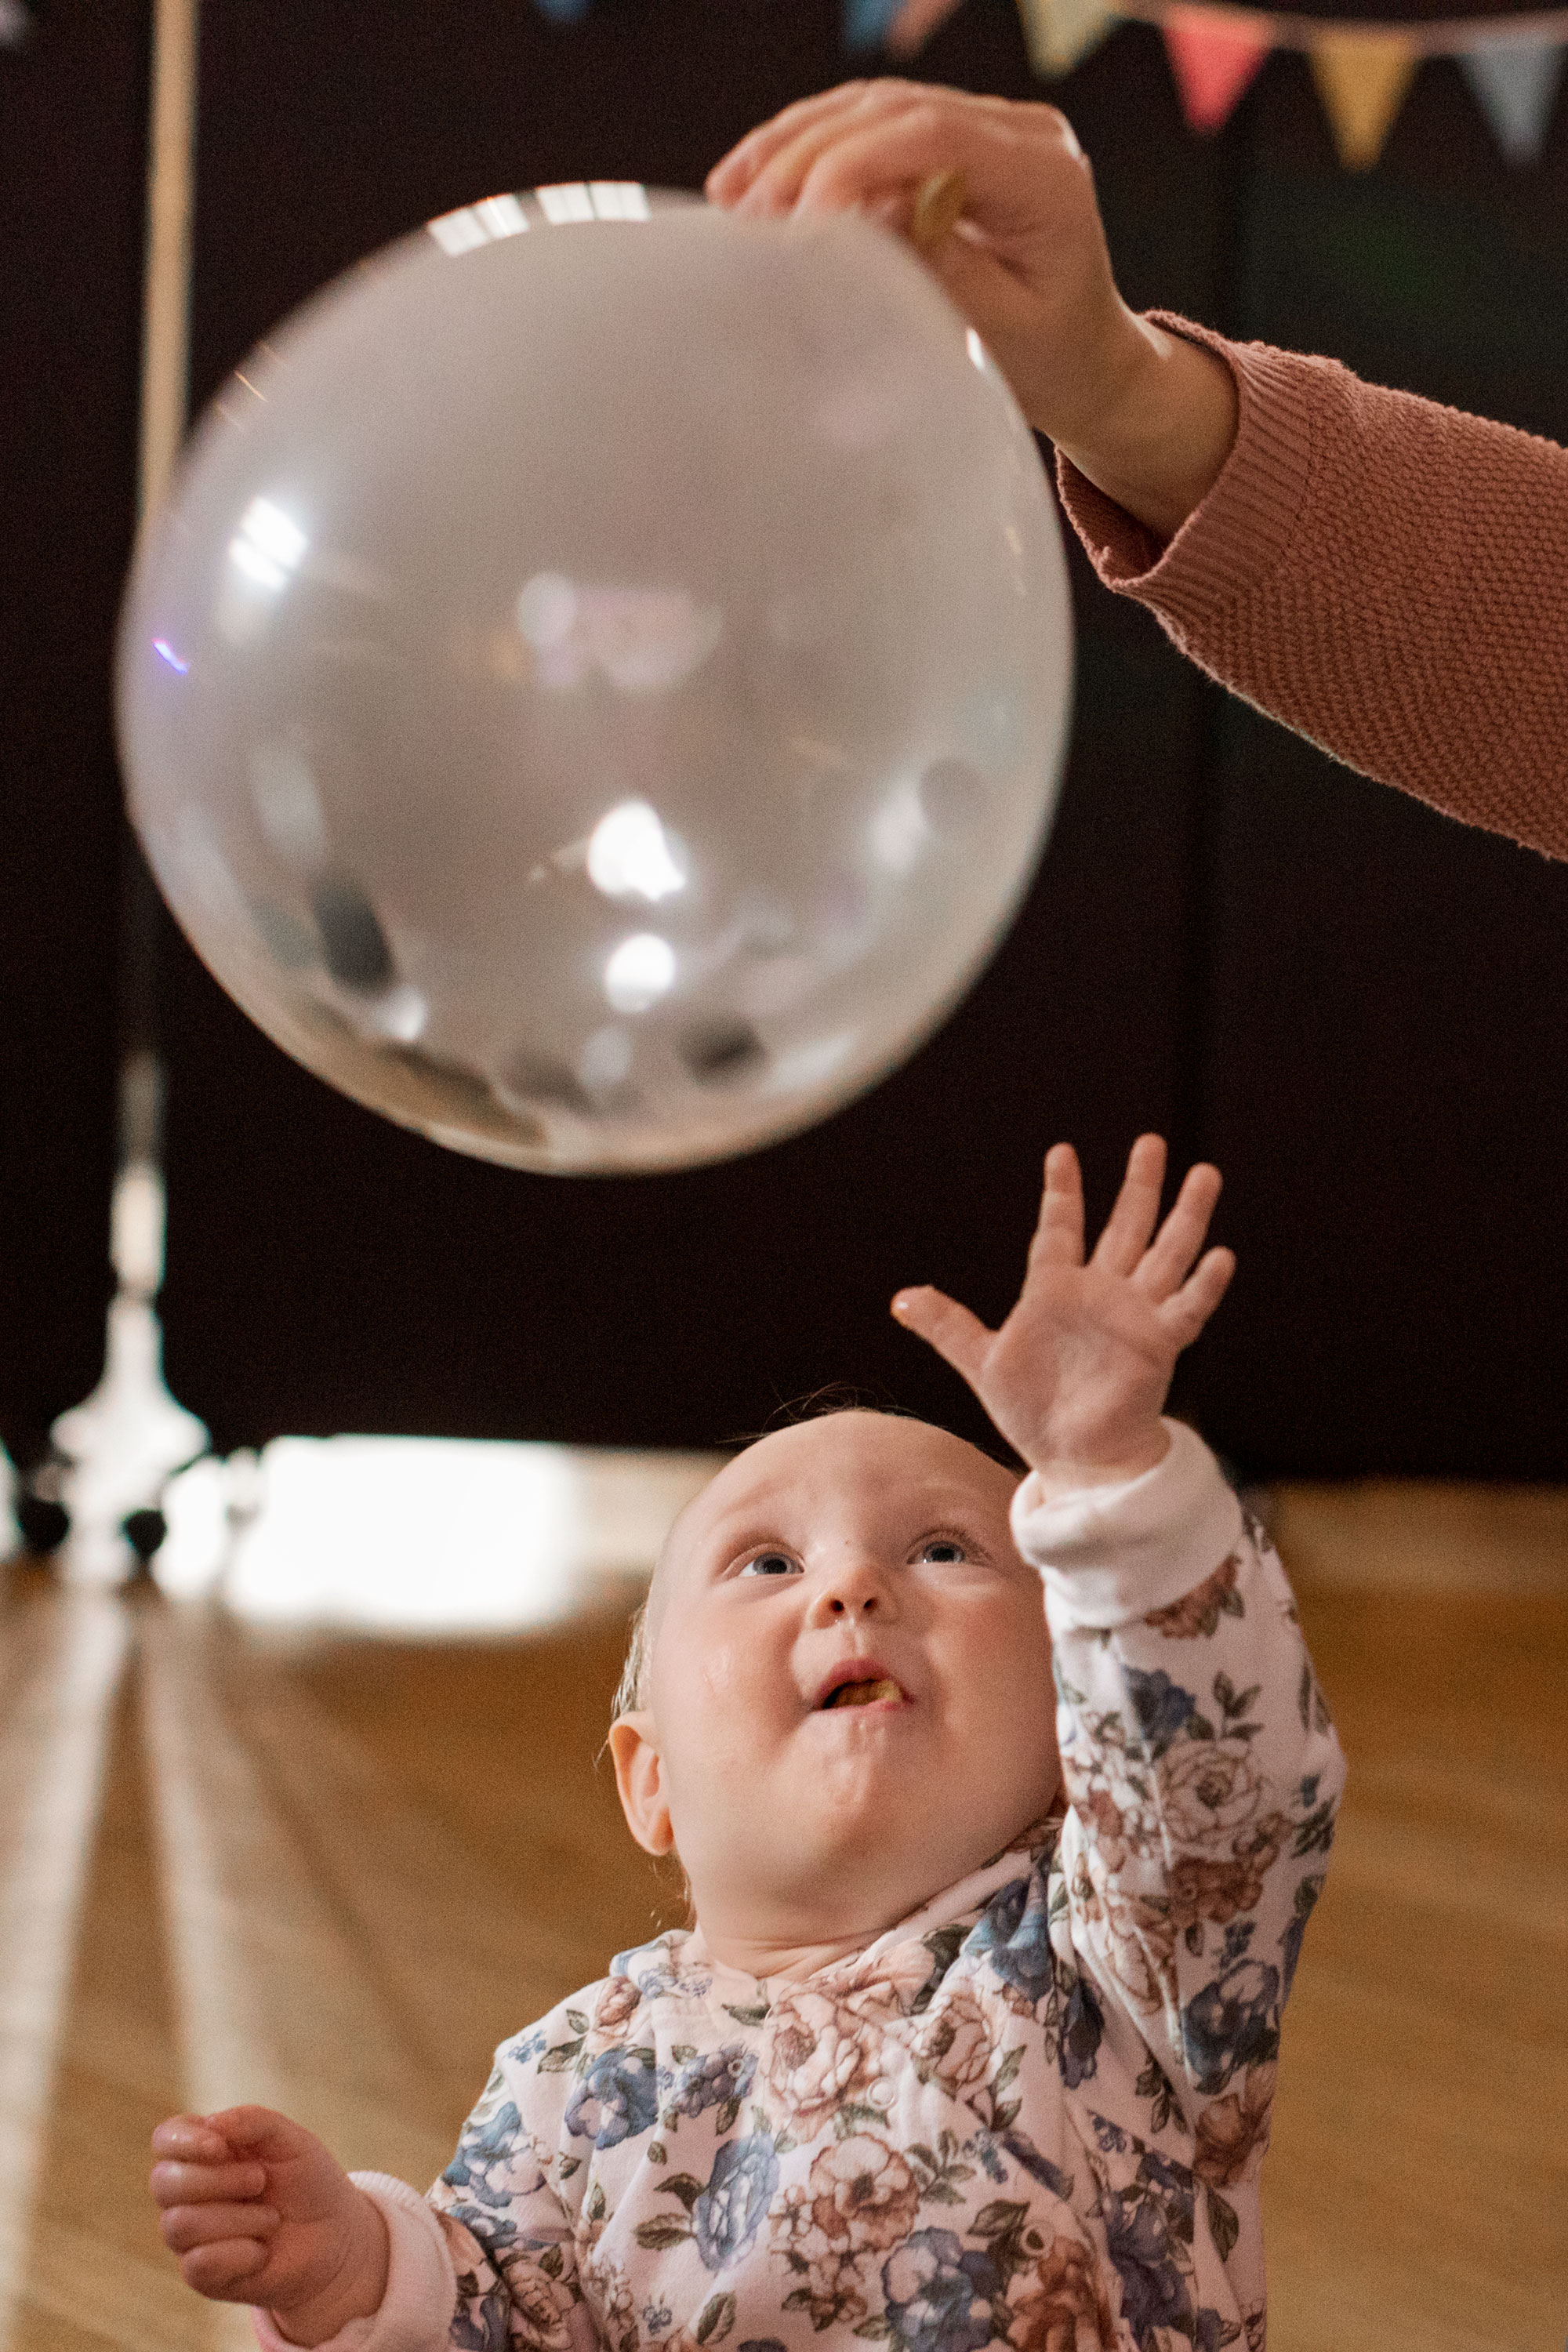 Bebis sträcker sig efter en ballong.